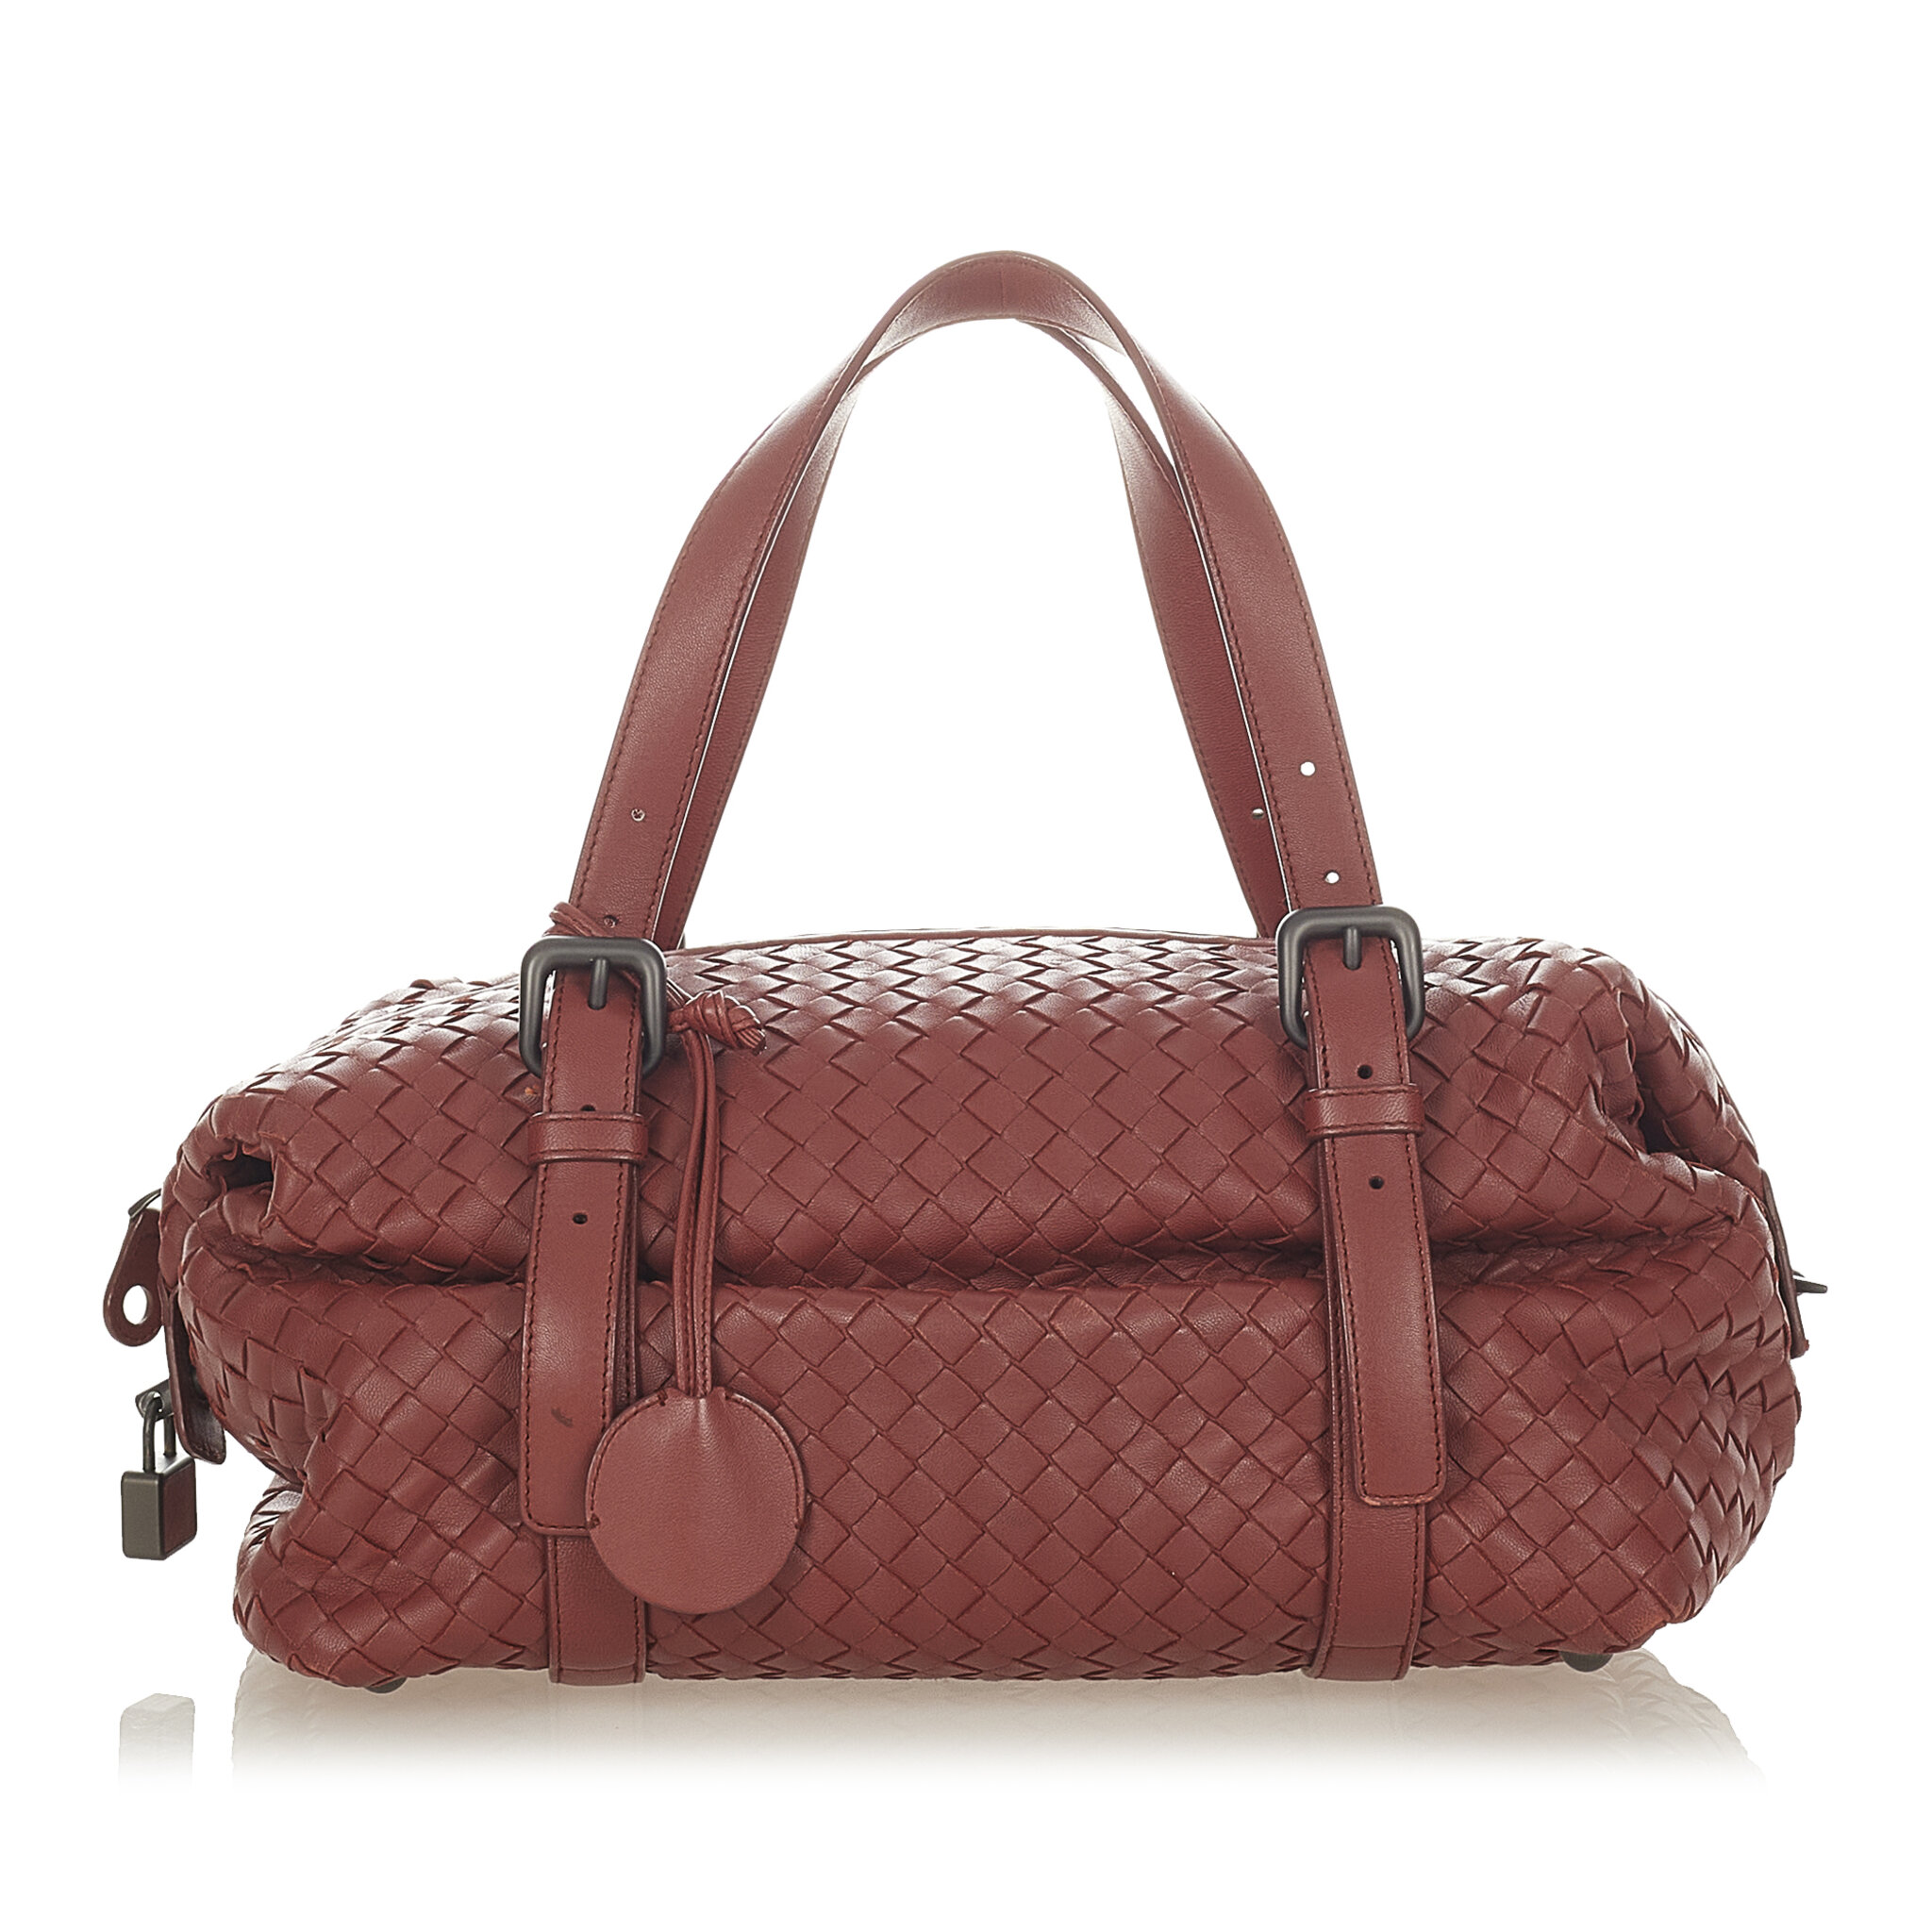 Bottega Veneta Intrecciato Leather Handbag, ONESIZE, red